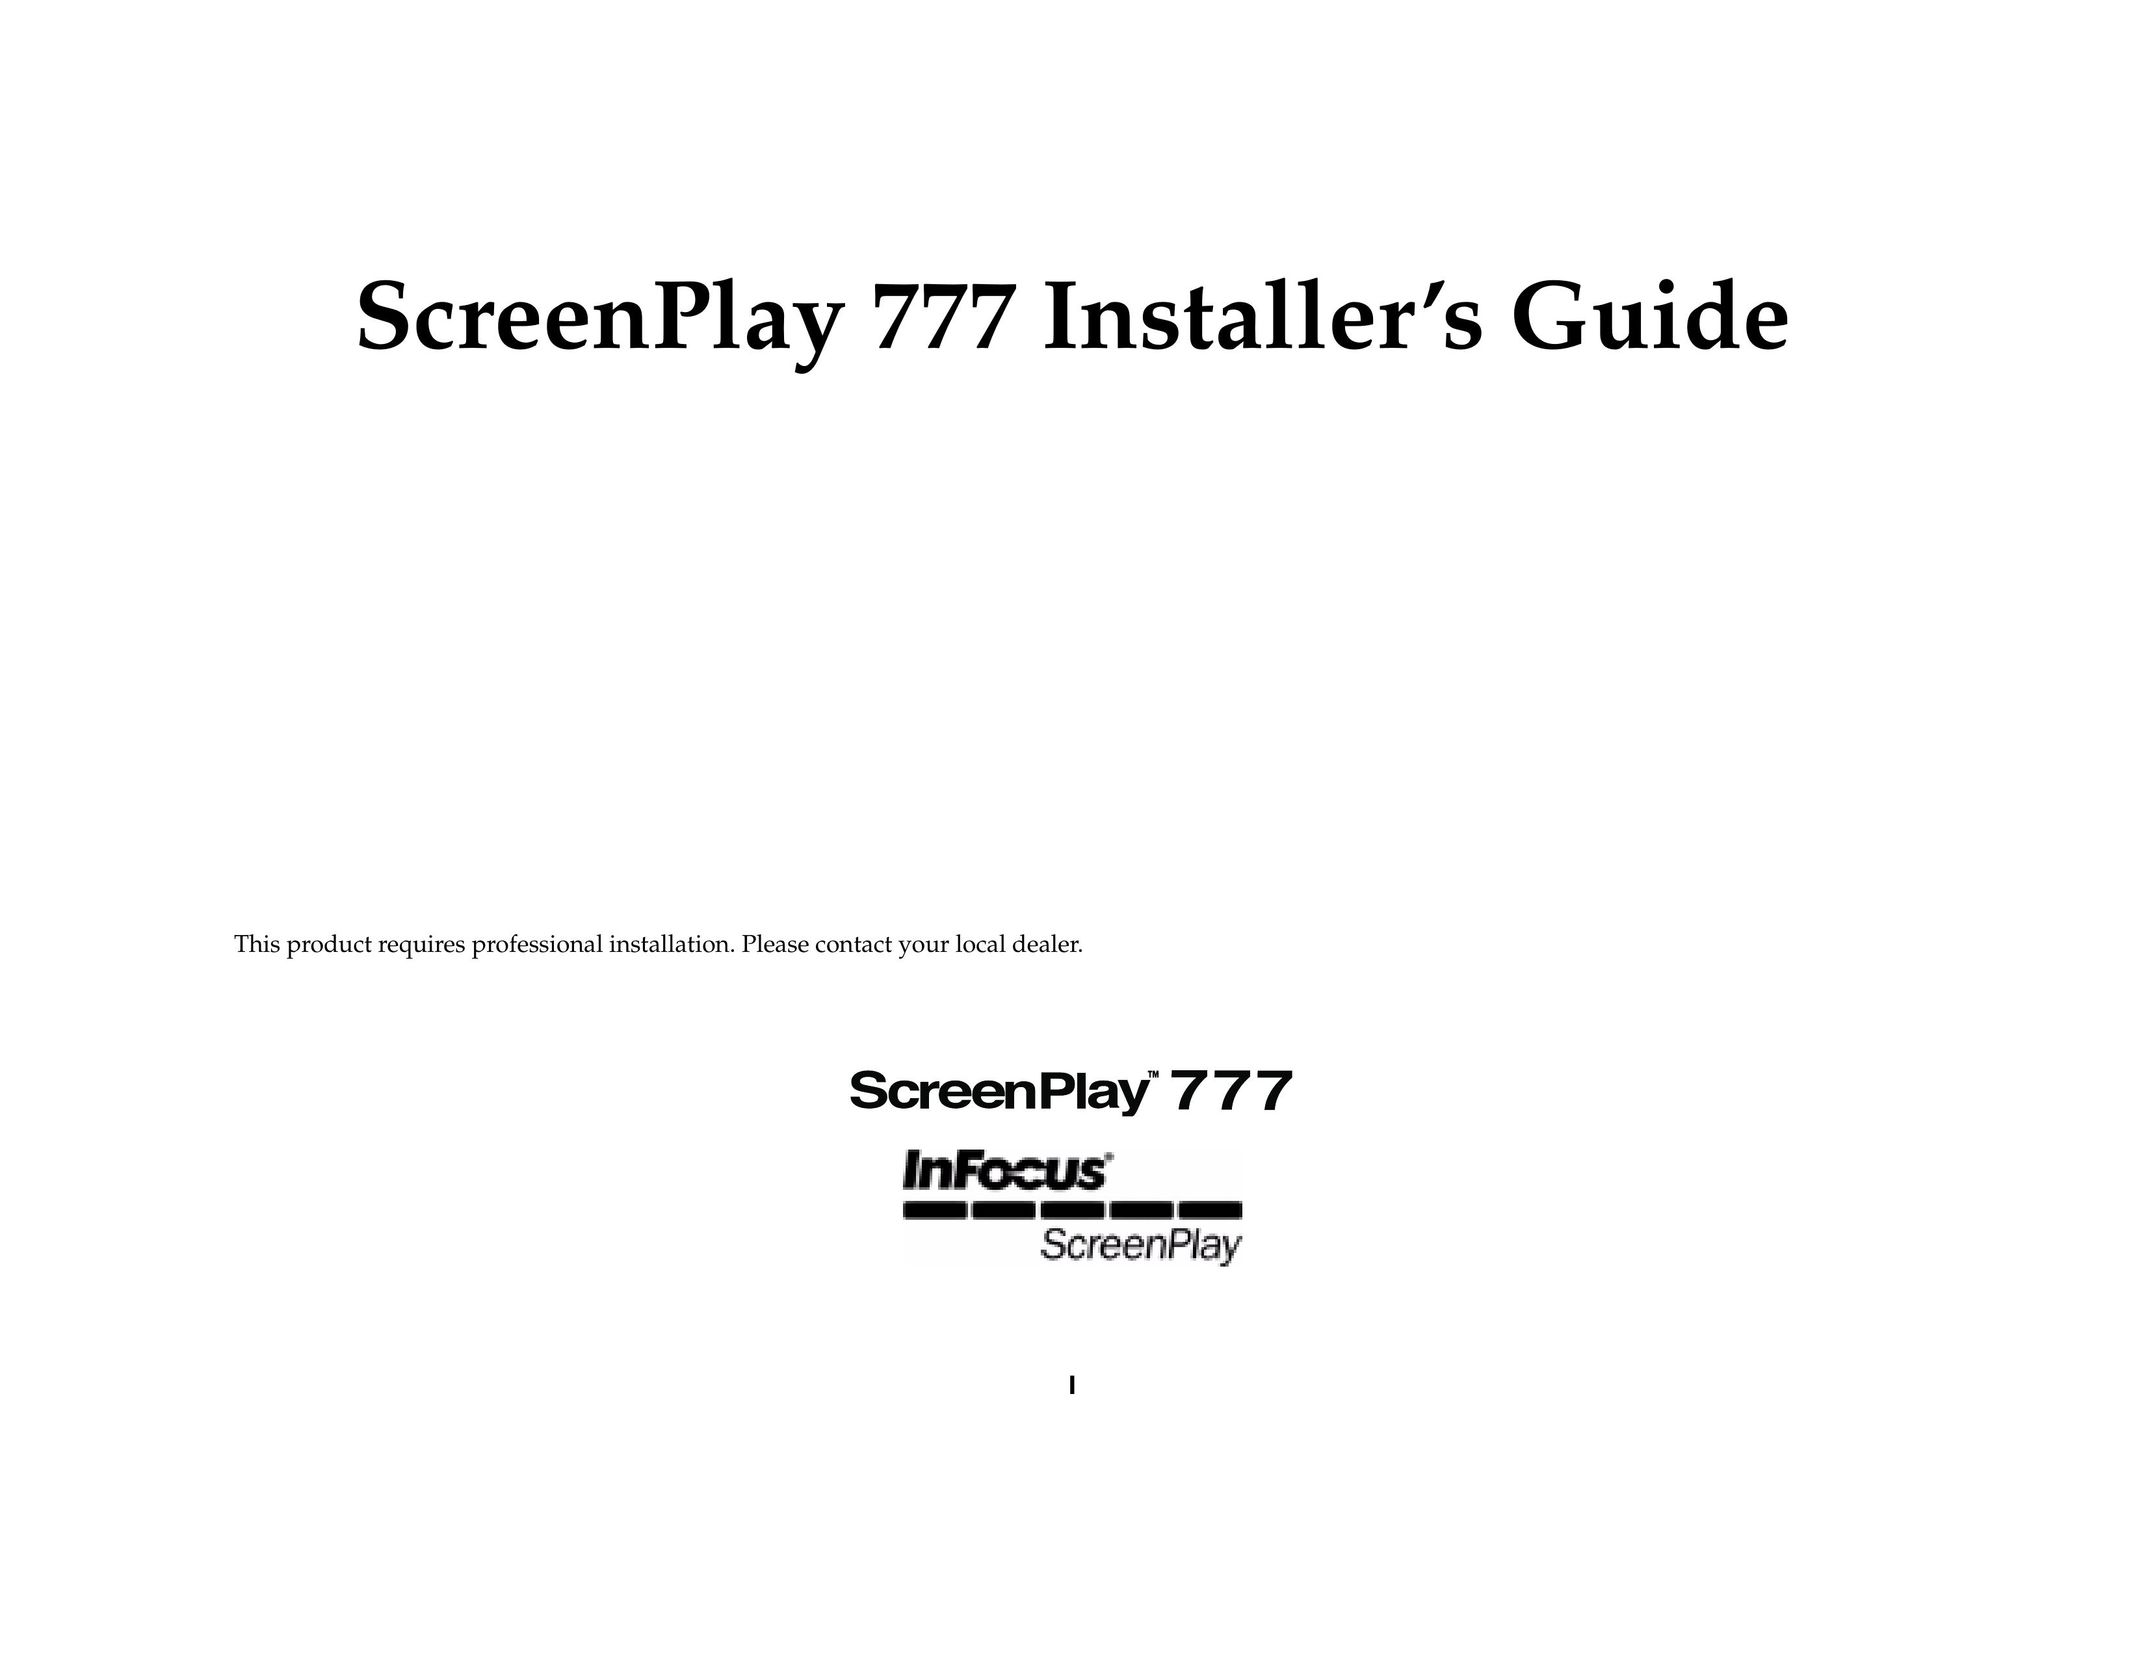 Kodak 777 Projector Accessories User Manual